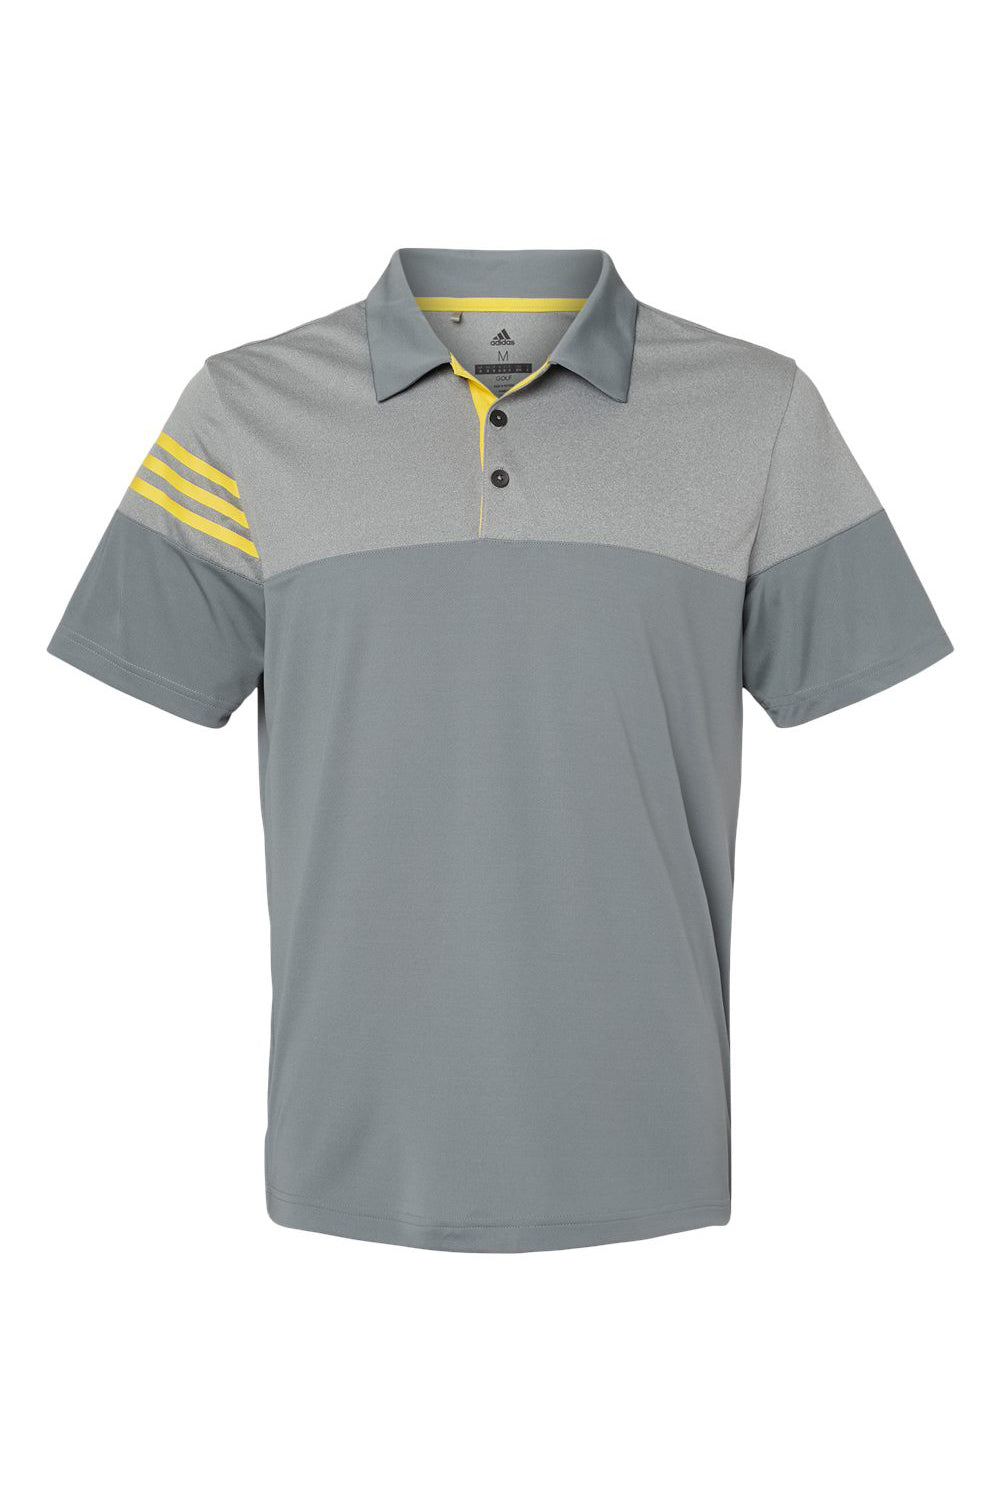 Adidas A213 Mens 3 Stripes Heathered Colorblock Short Sleeve Polo Shirt Vista Grey/Yellow Flat Front